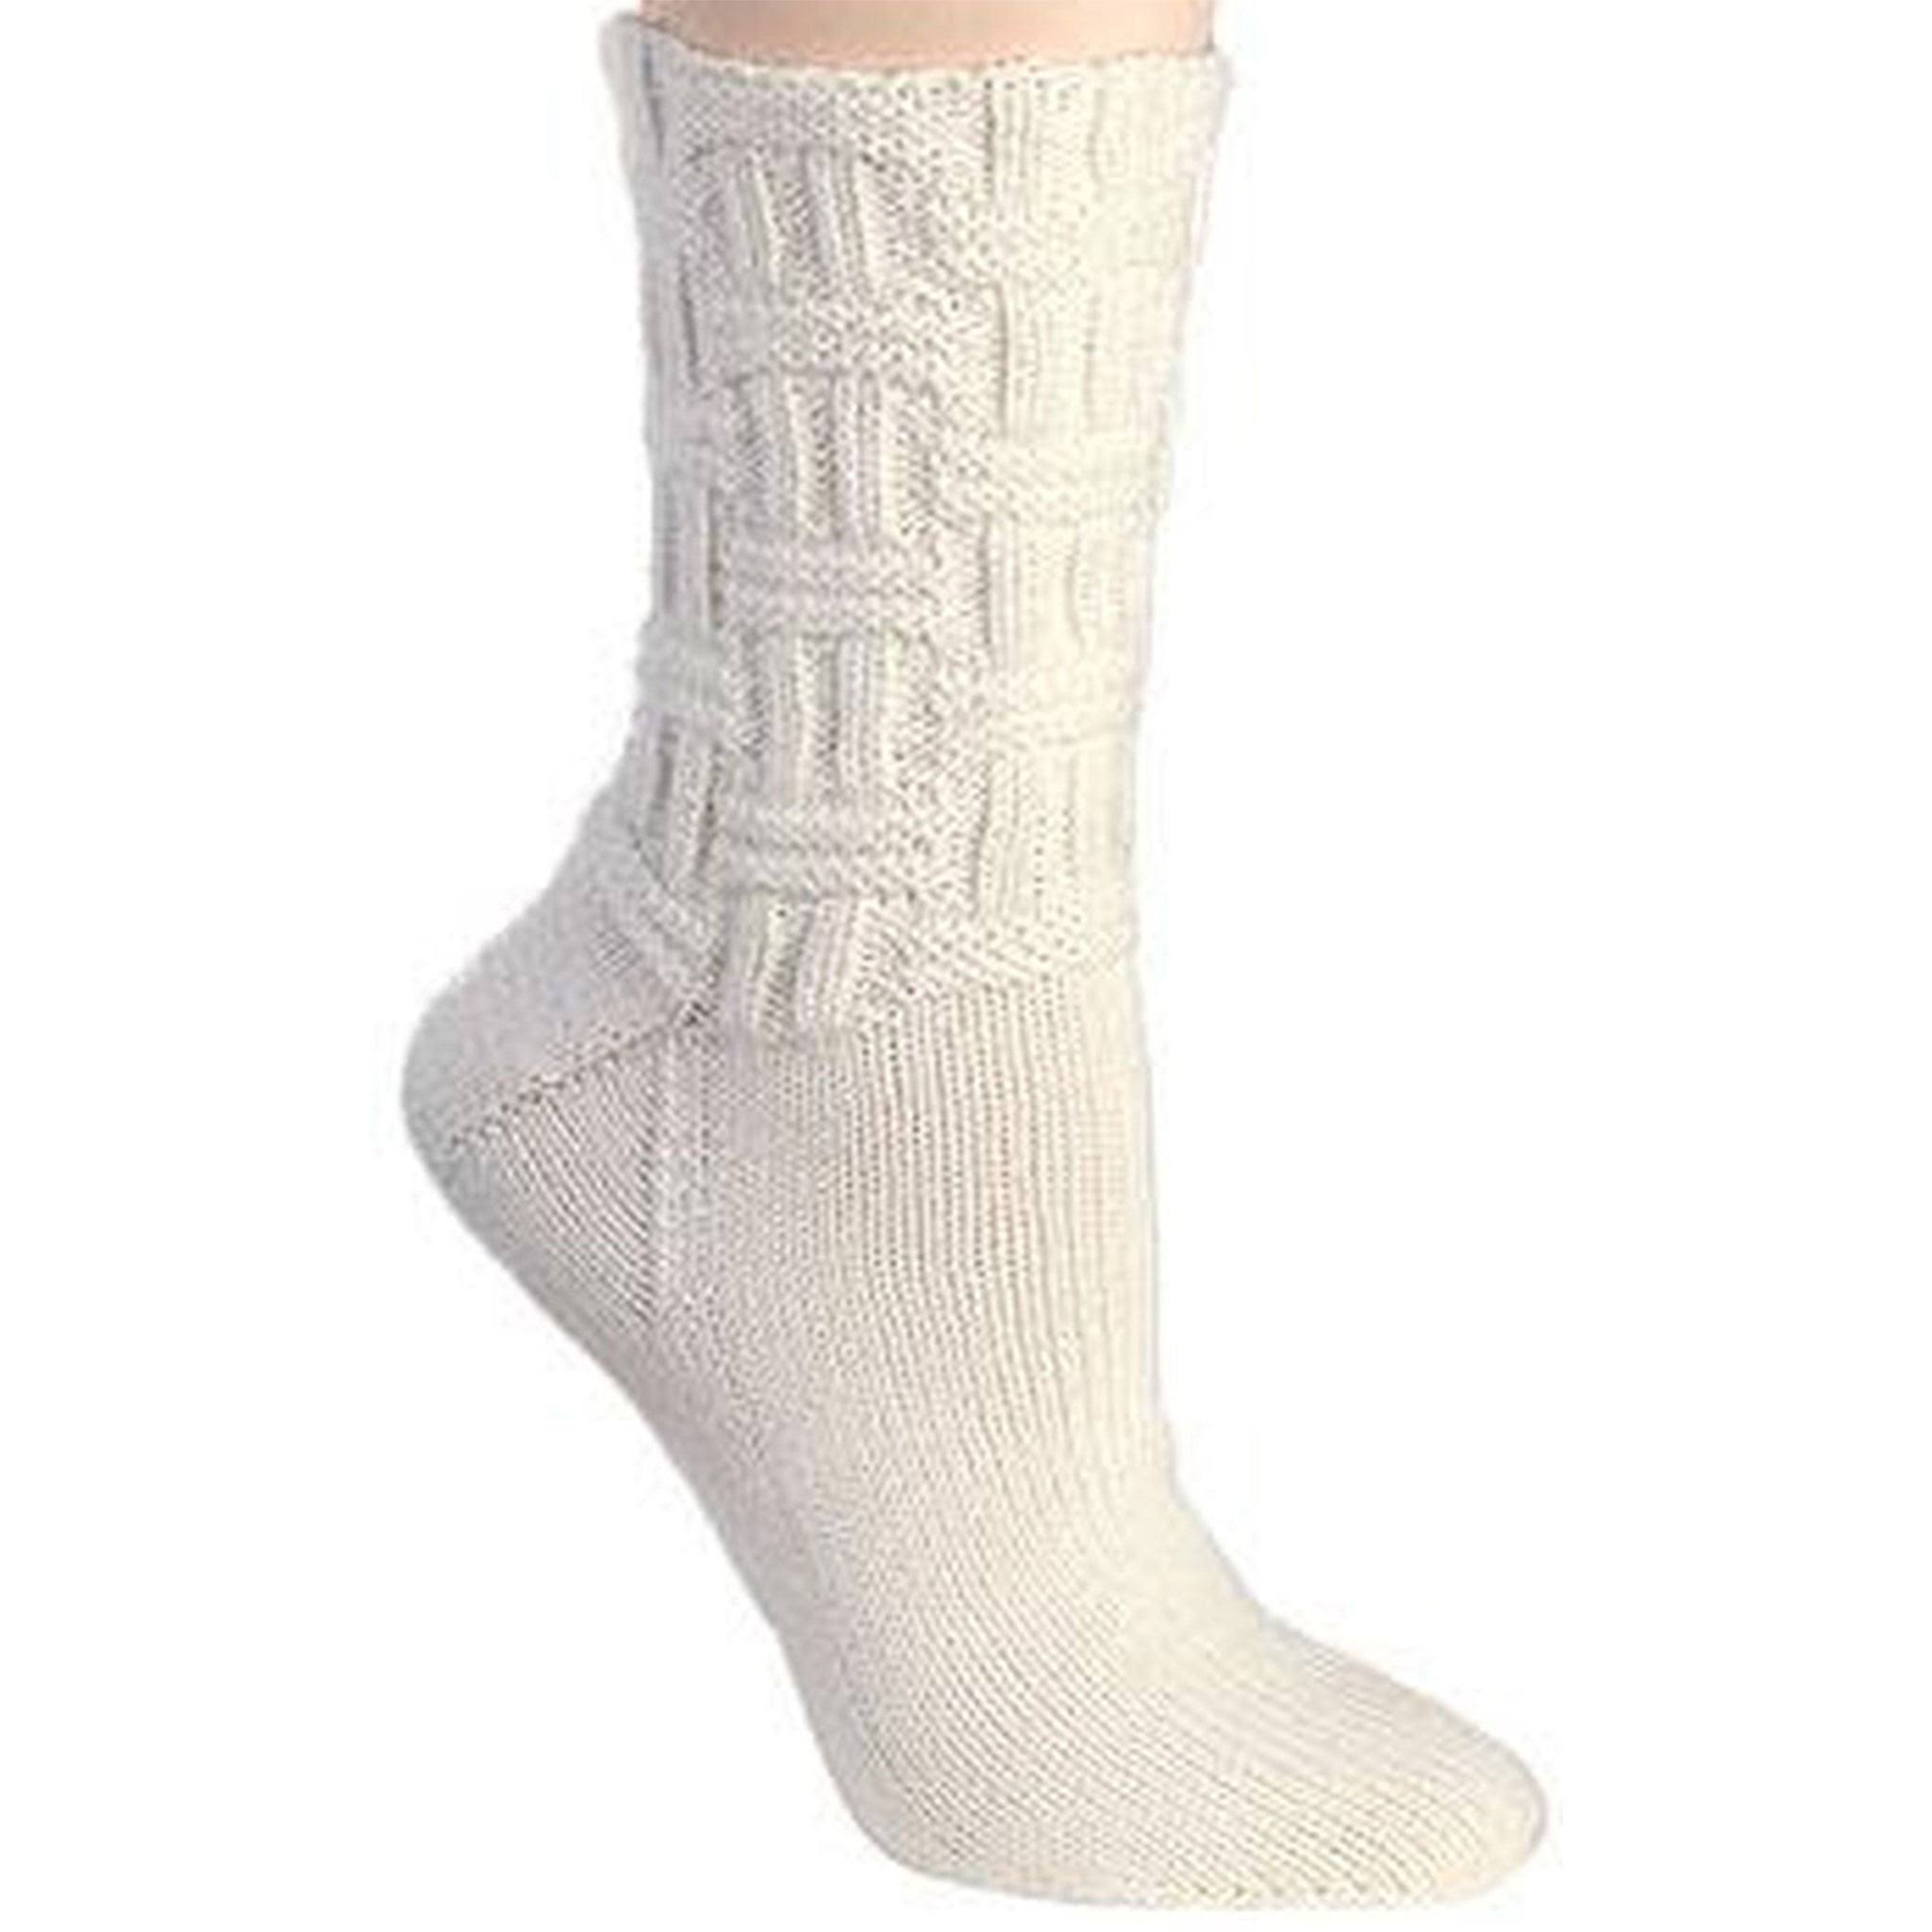 Berroco Comfort Sock Yarn - 1702 - Pearl